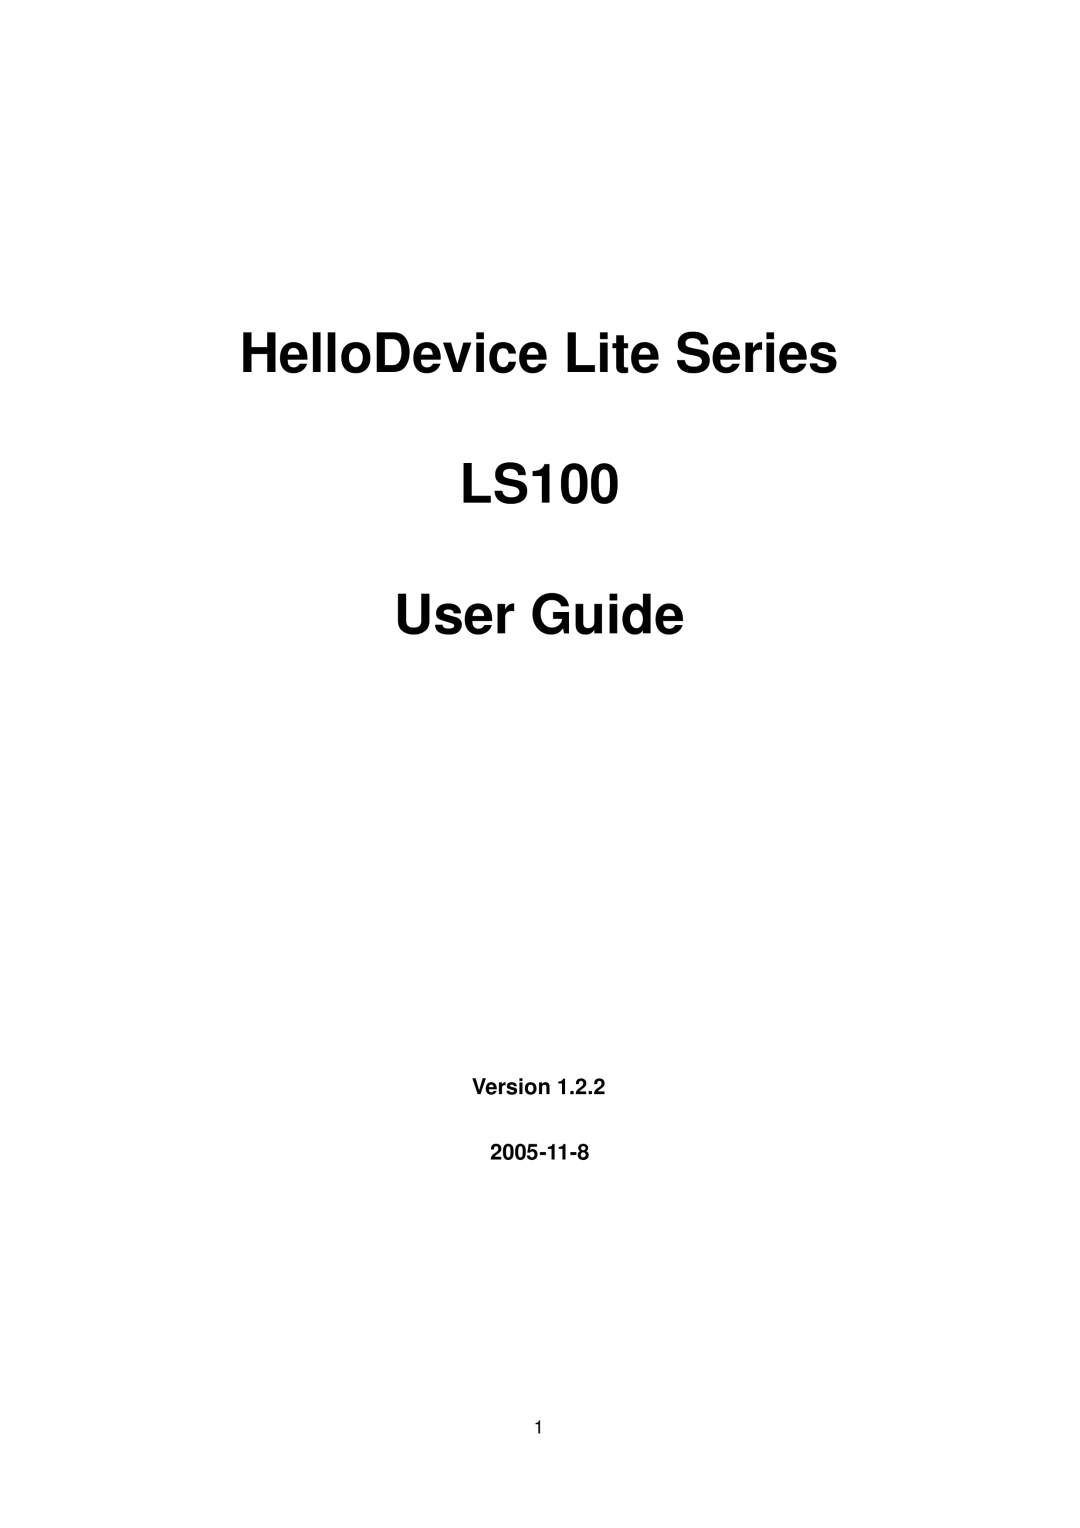 Senatek manual HelloDevice Lite Series LS100 User Guide 